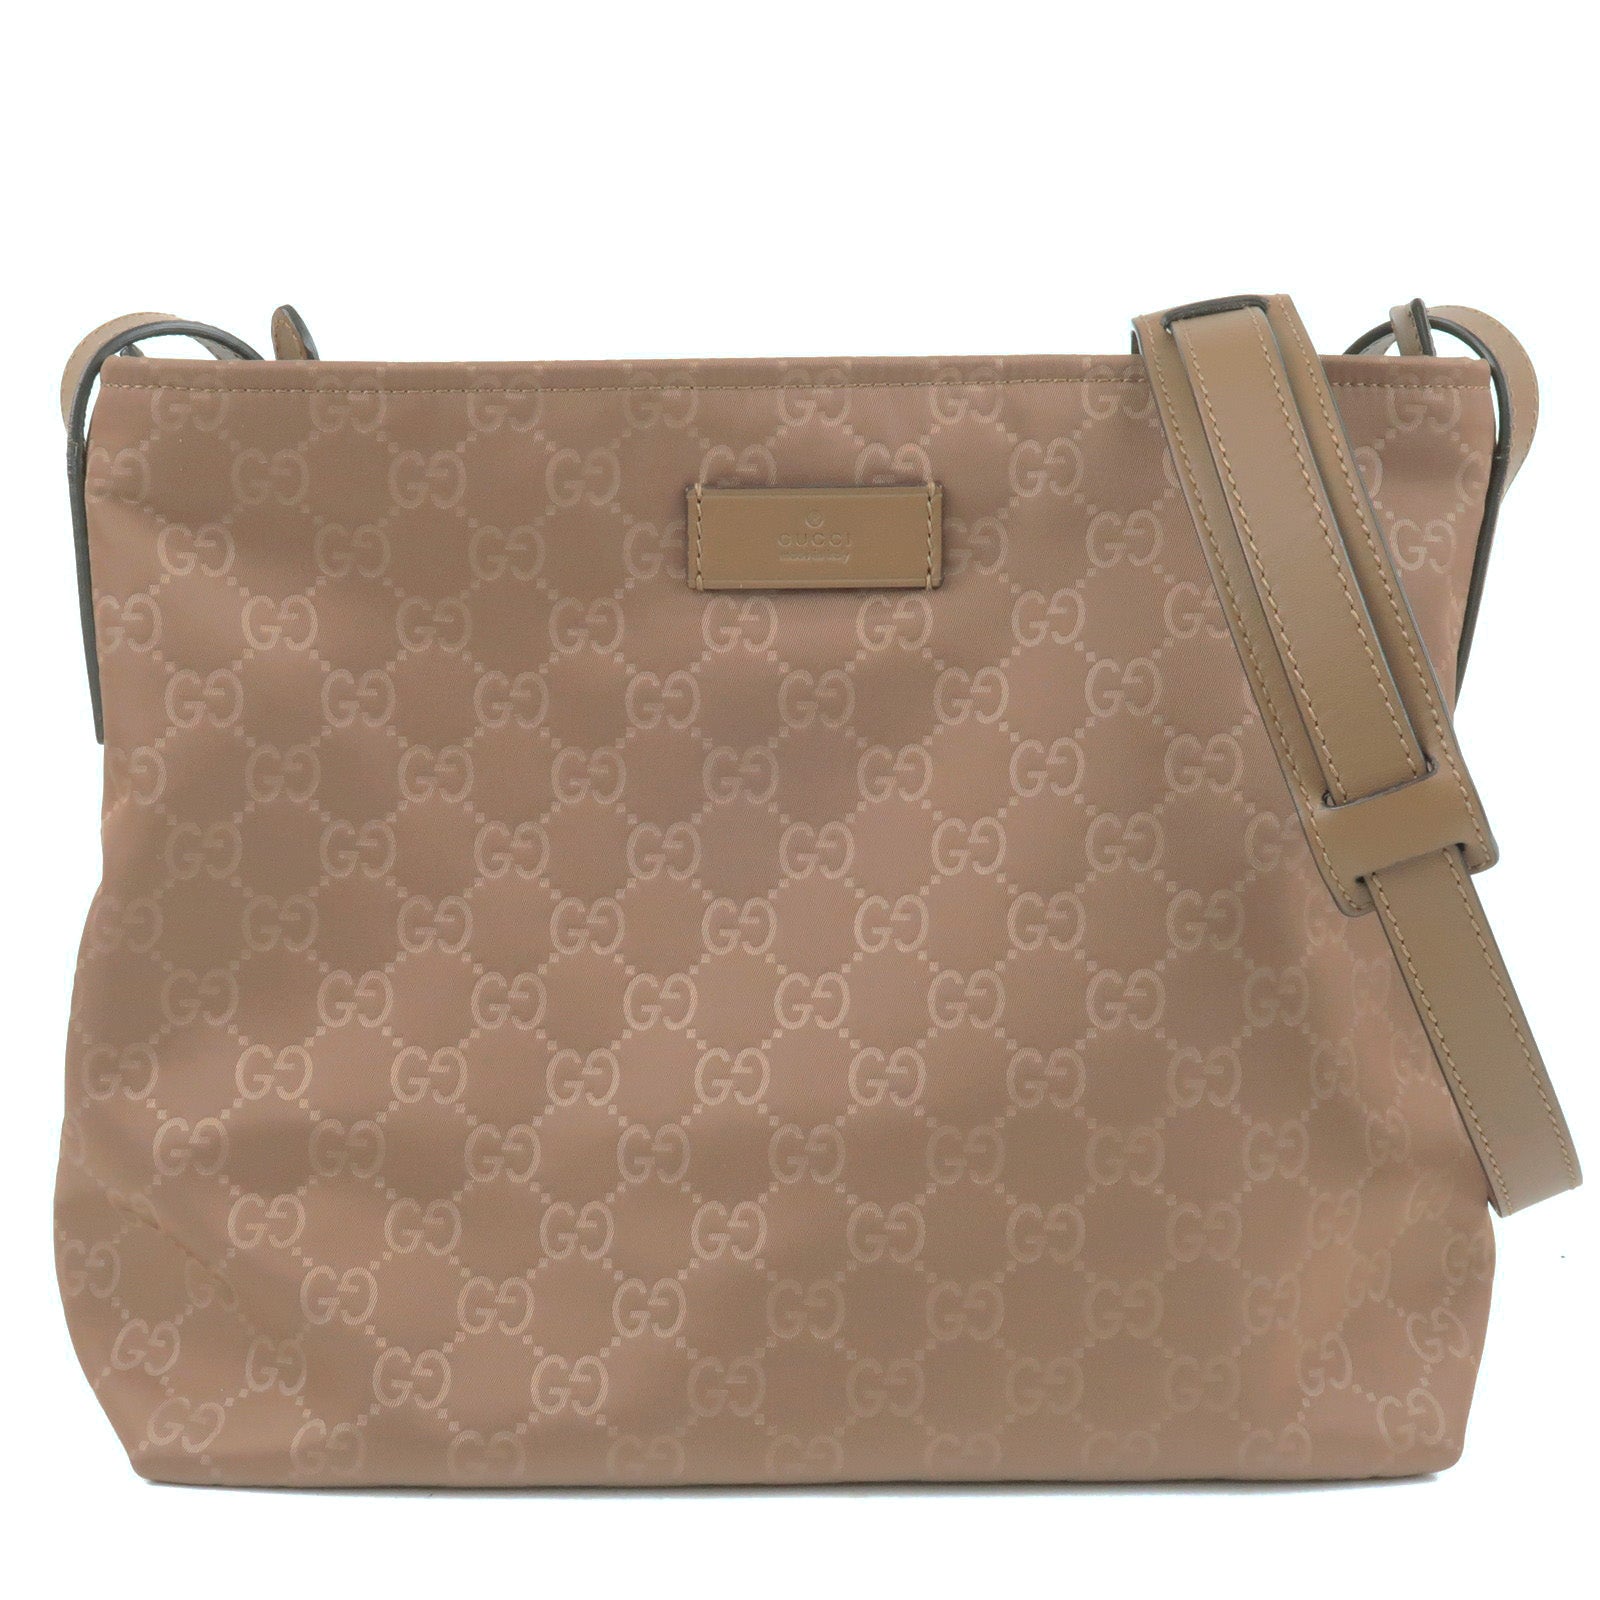 GUCCI-GG-Nylon-Leather-Shoulder-Bag-Purse-Brown-314529